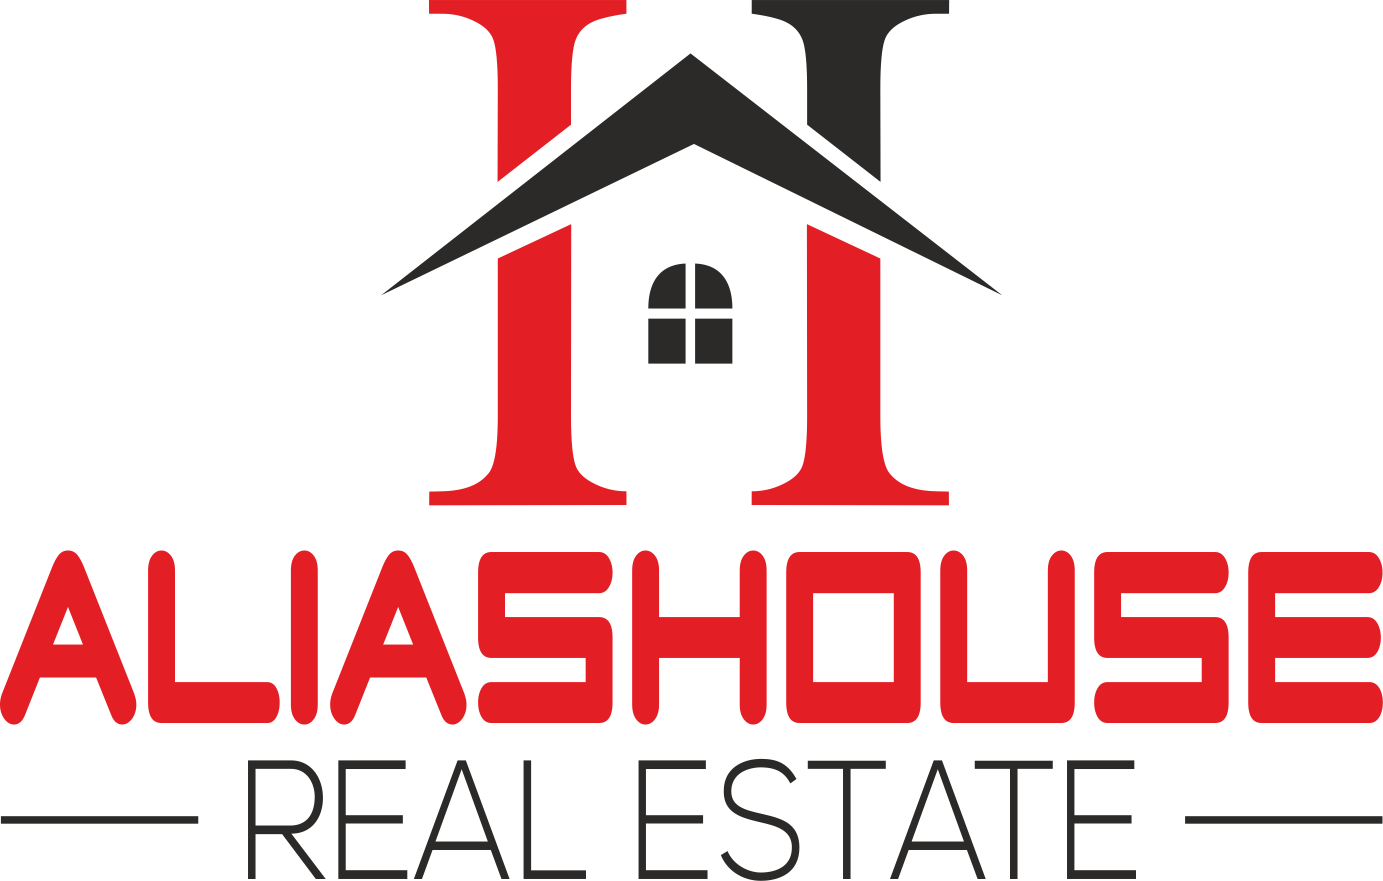 AliasHouse - Real Estate - Agent Contact